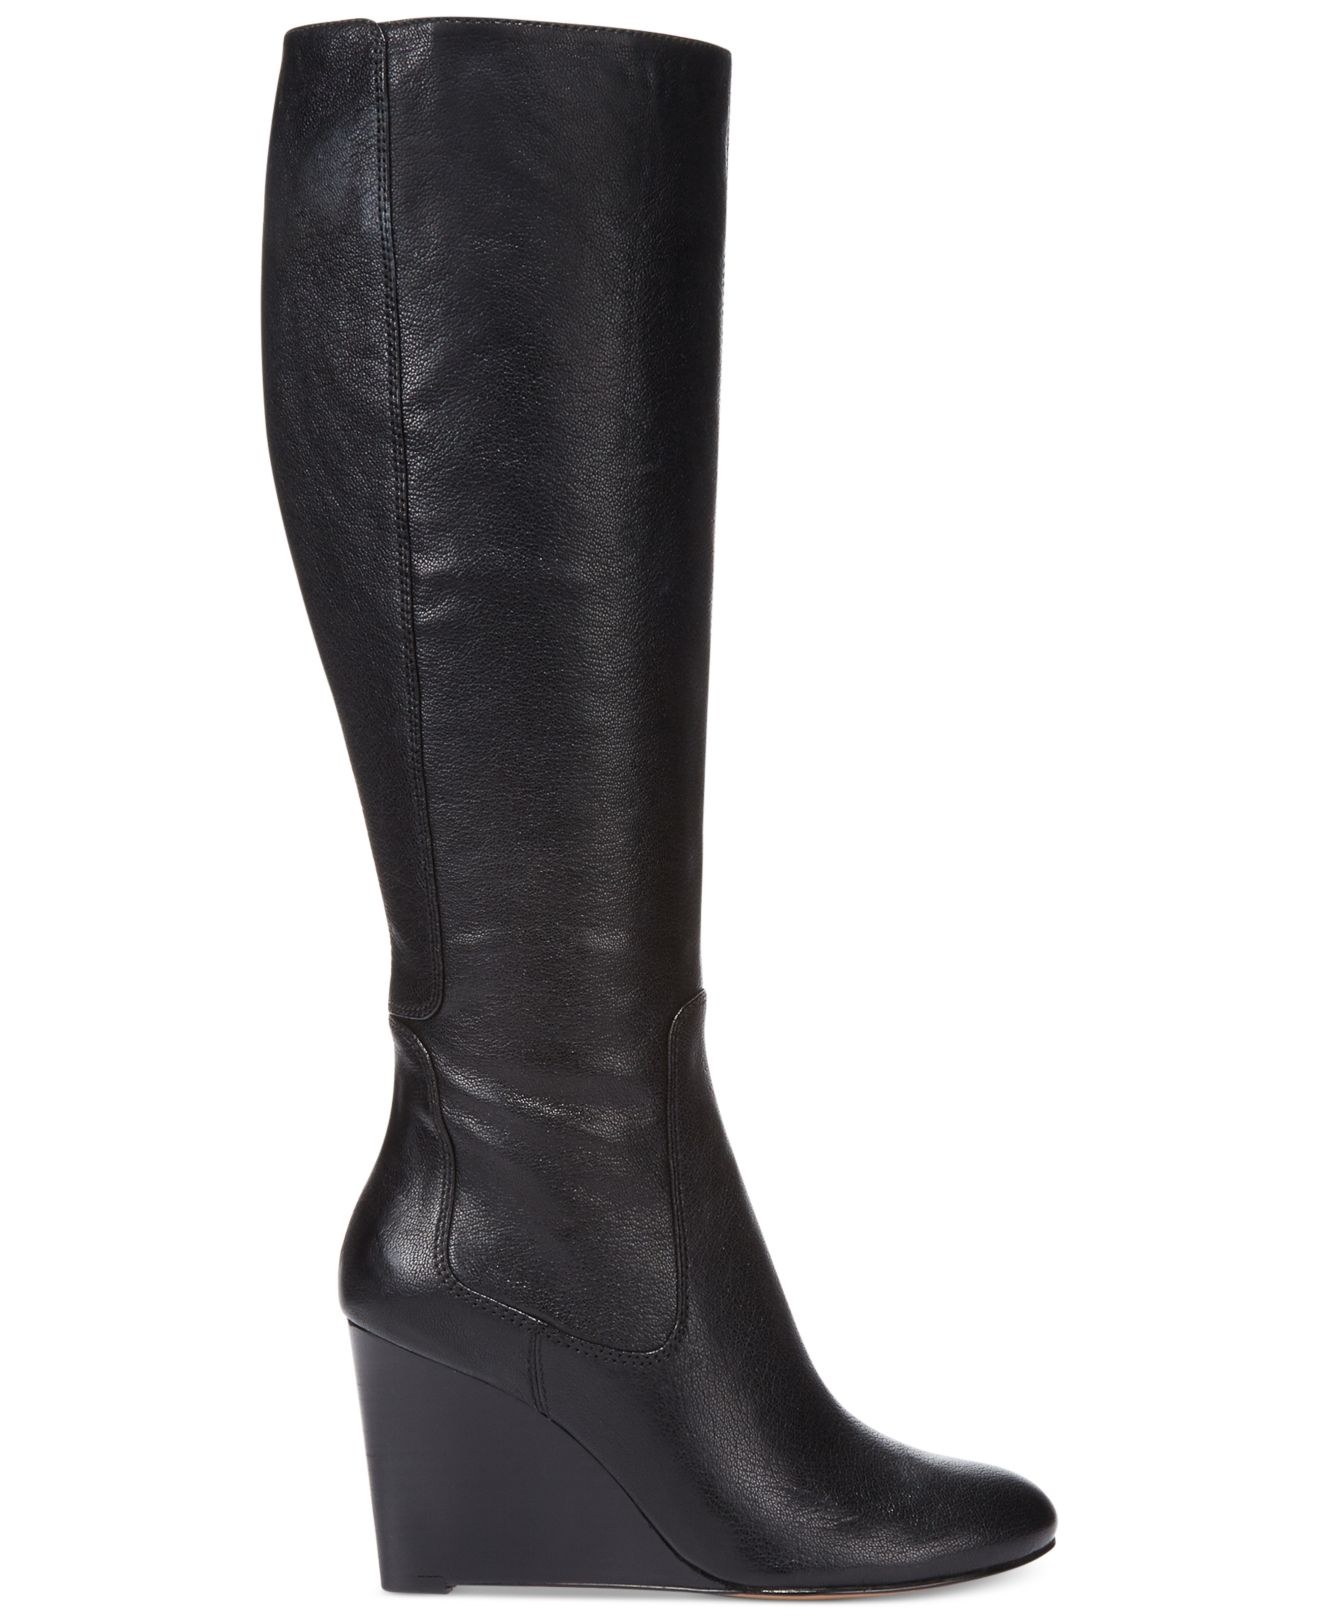 black leather dress boots women's